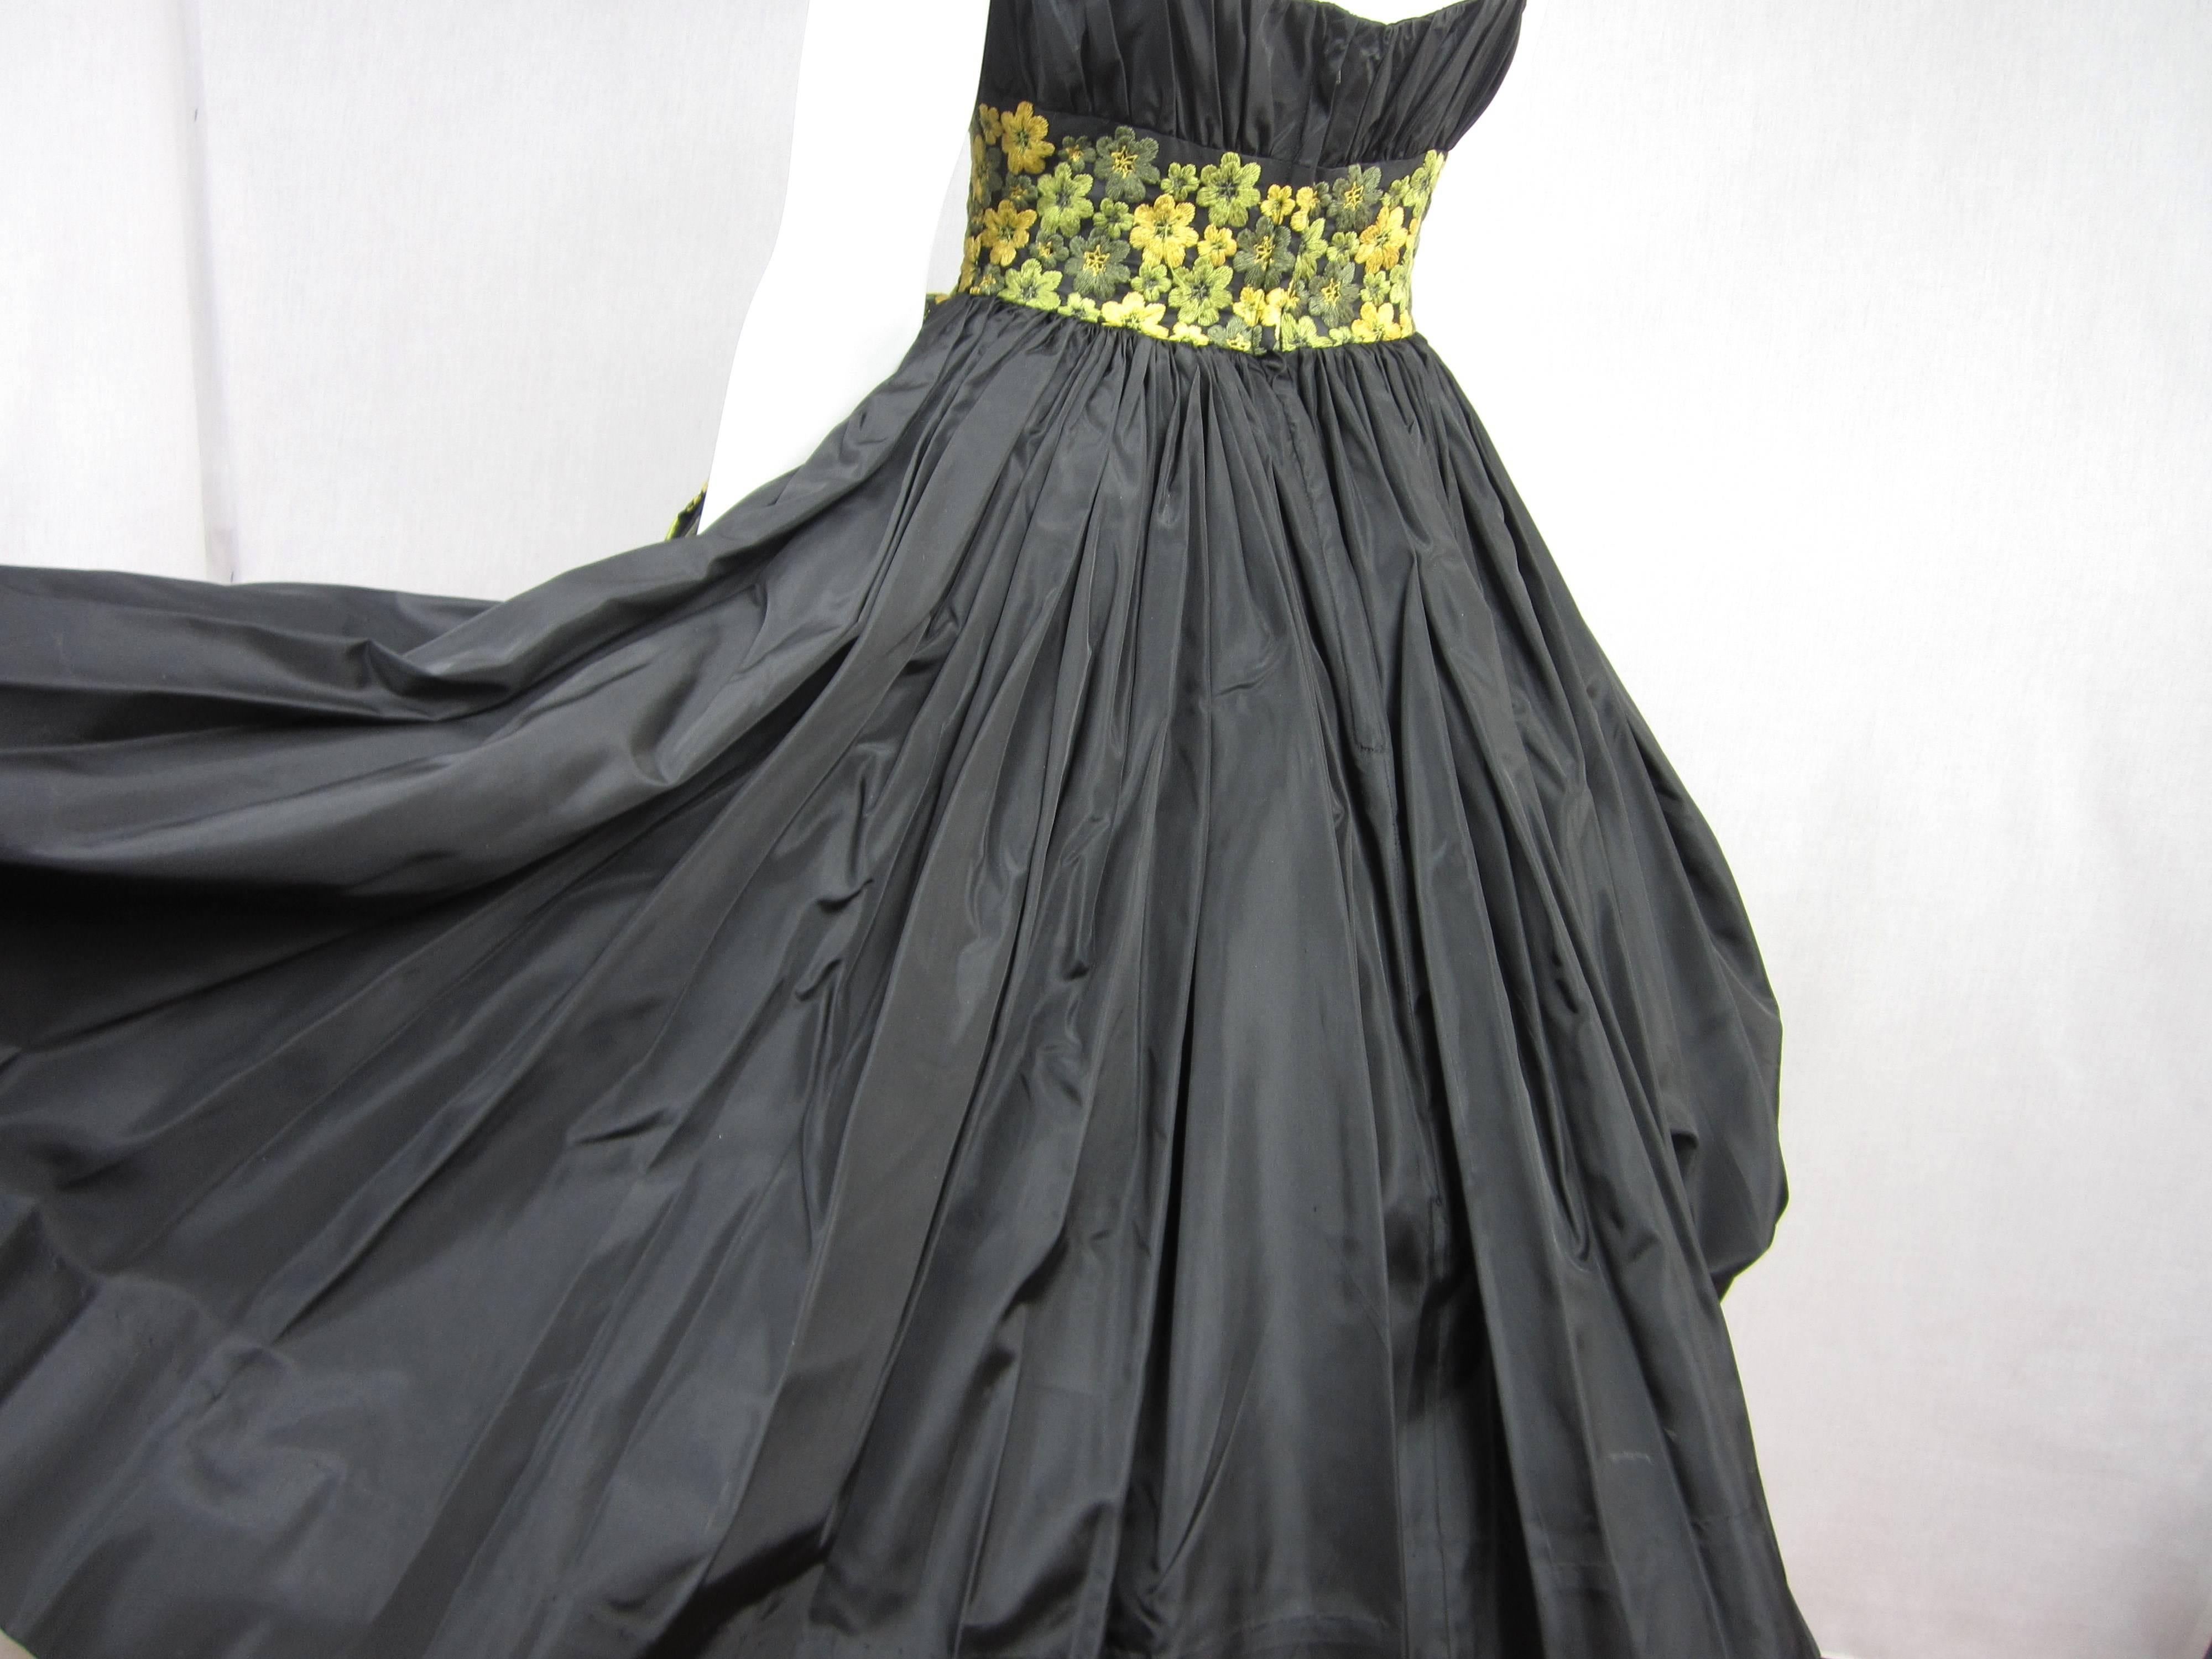  1950s Dress Black Embroidered Shelf Bust Taffeta Party Dress For Sale 1